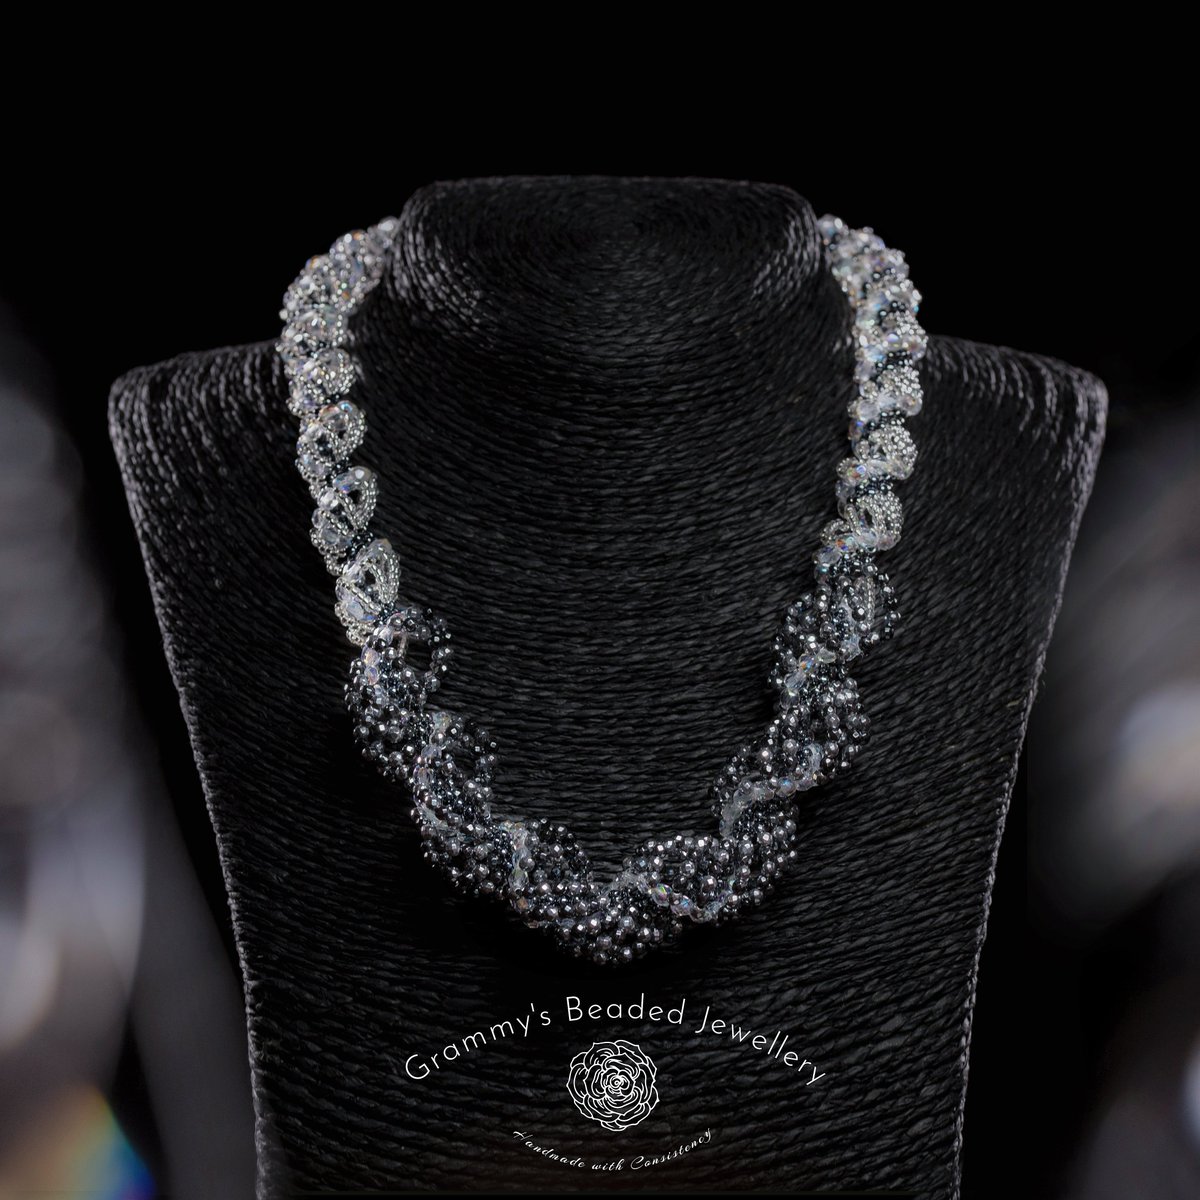 'Lucinda' beaded necklace...
you're never fully dressed without jewelry 🖤🤍

#beadedjewelry #beadednecklace
#handmade #hematite #beadsandmore
#crystalsfromswarovski®